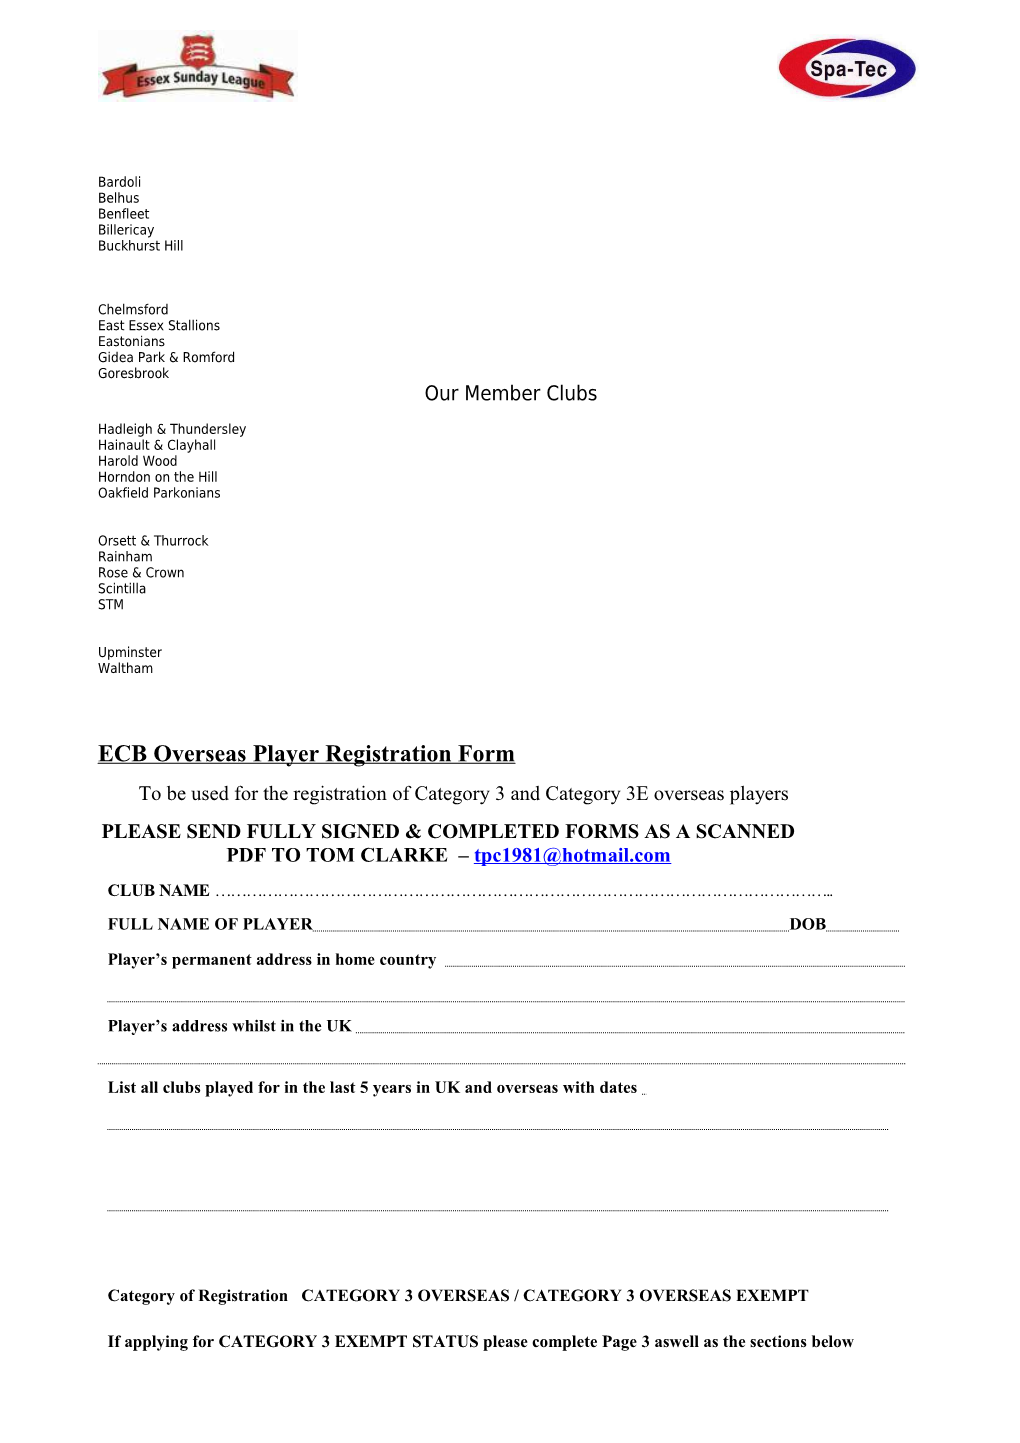 ECB Overseas Player Registration Form